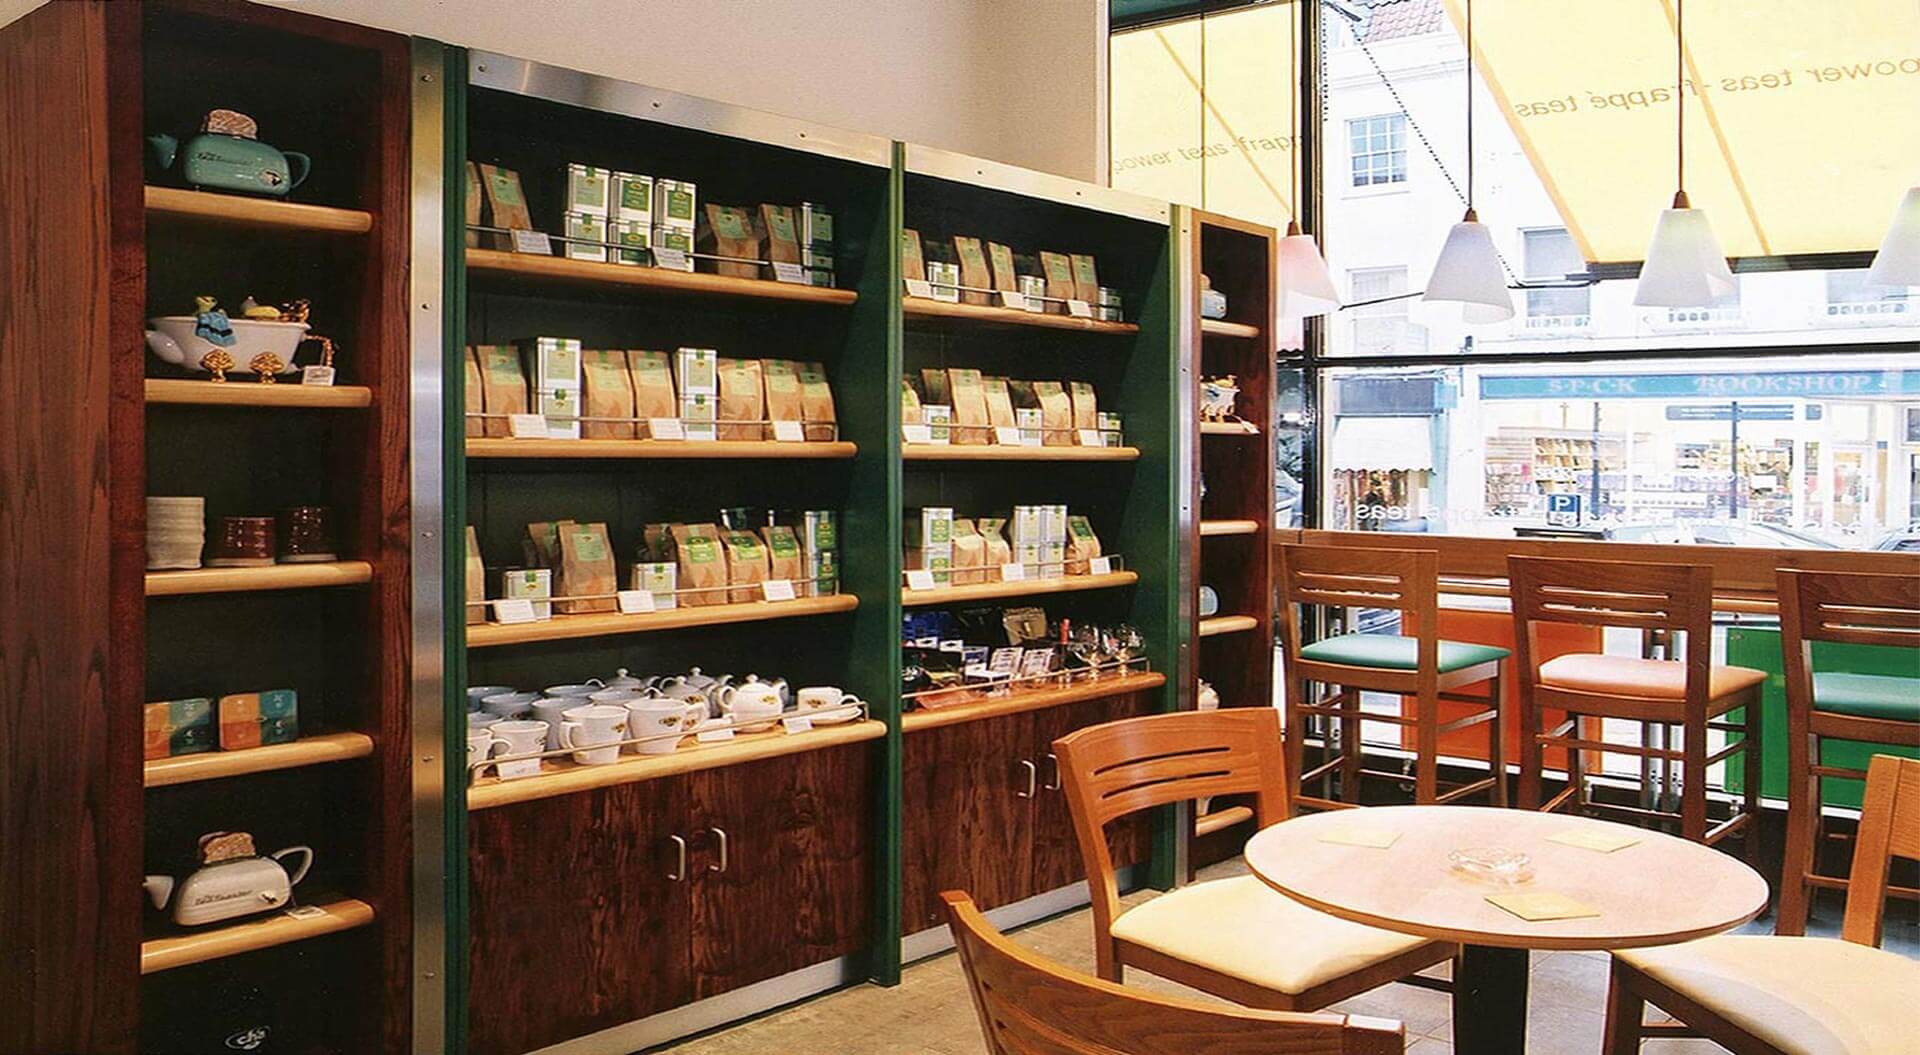 Cha Teahouse café  interior design seating area and impulse merchandising